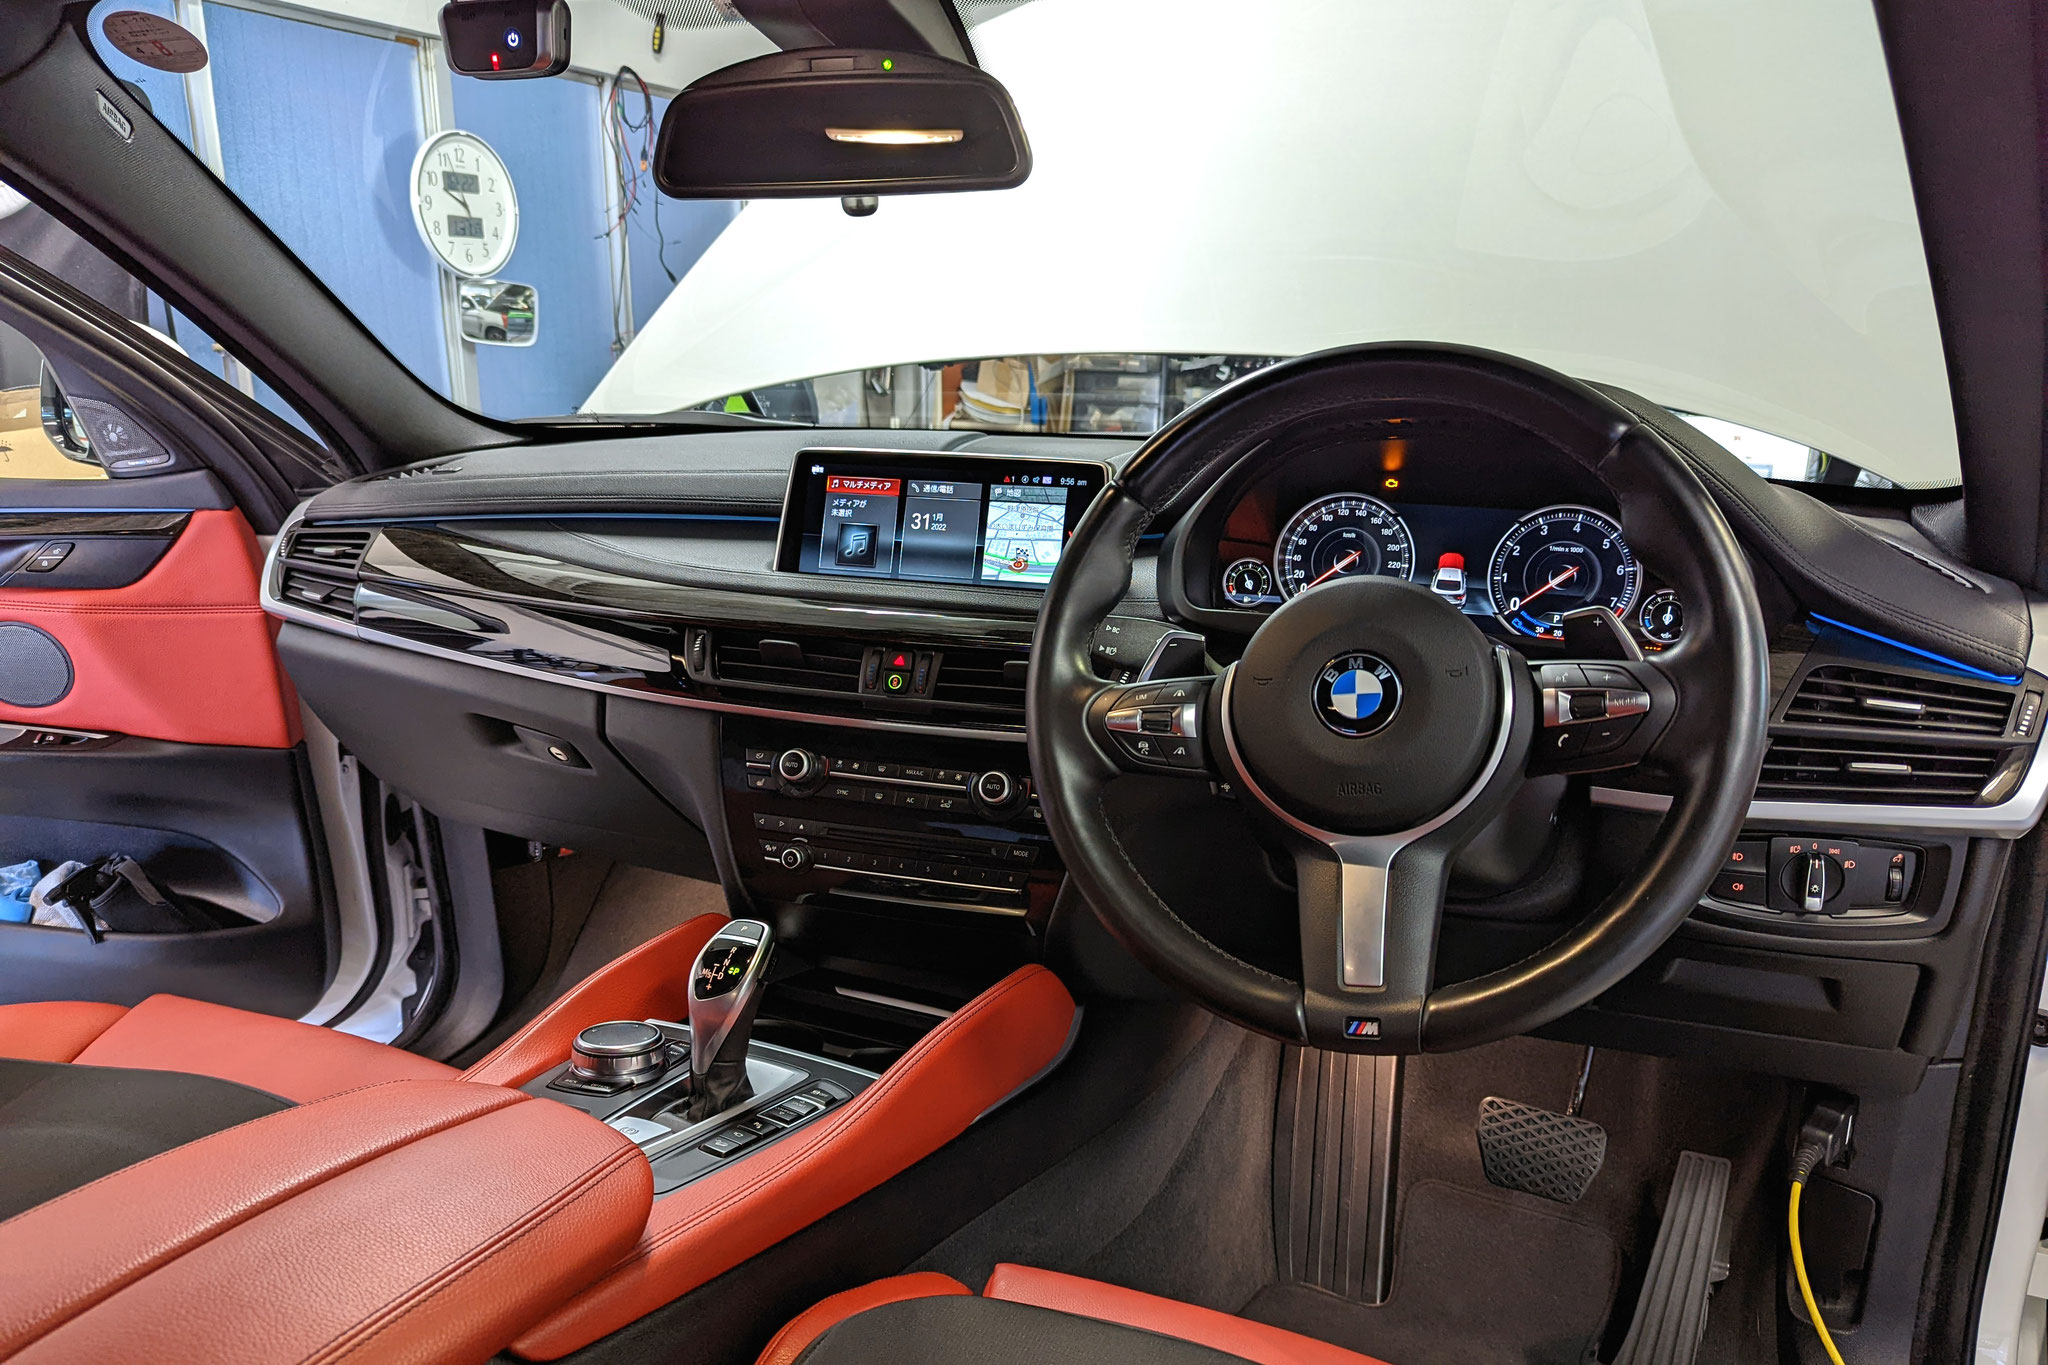 BMW F16 X6 35i 完全ハンズオフ渋滞アシスト後付け+コーディング - BMW